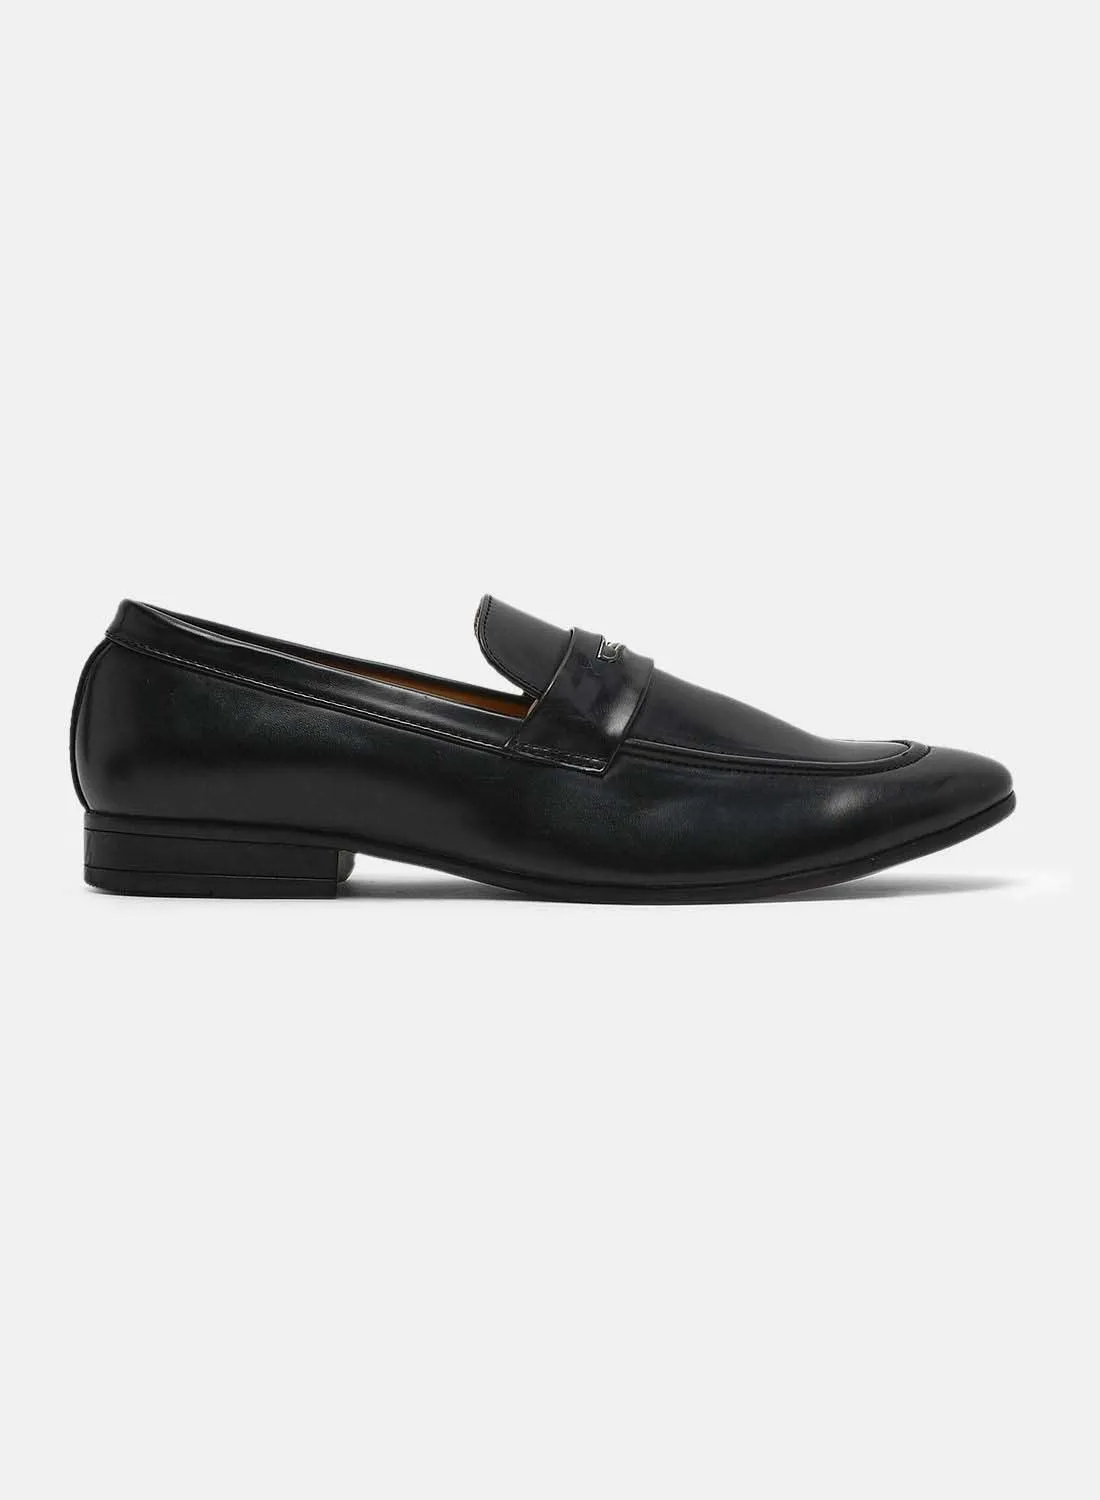 QUWA Slip-On Formal Shoes Black